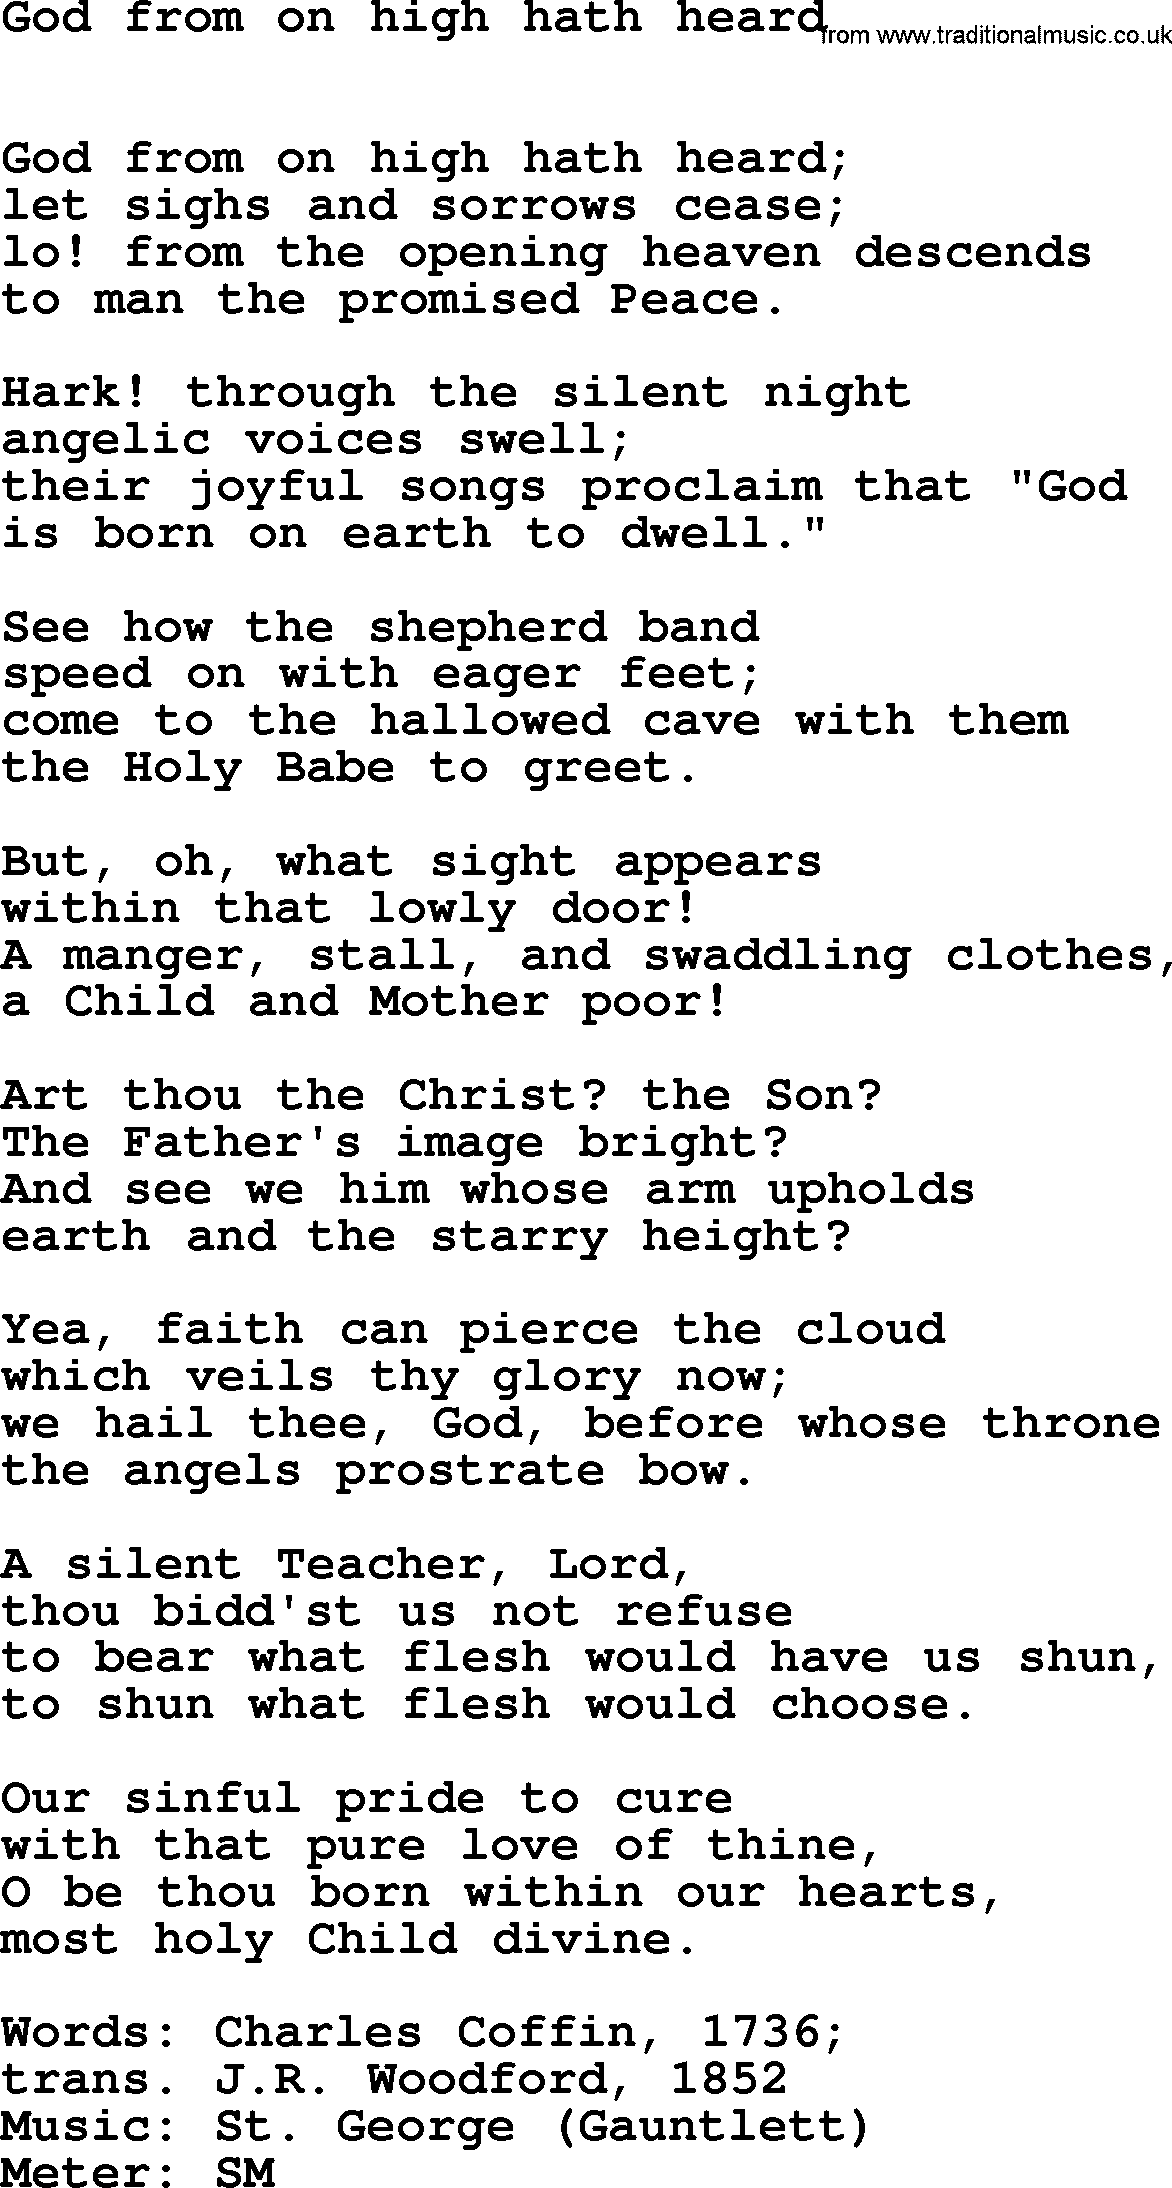 Book of Common Praise Hymn: God From On High Hath Heard.txt lyrics with midi music